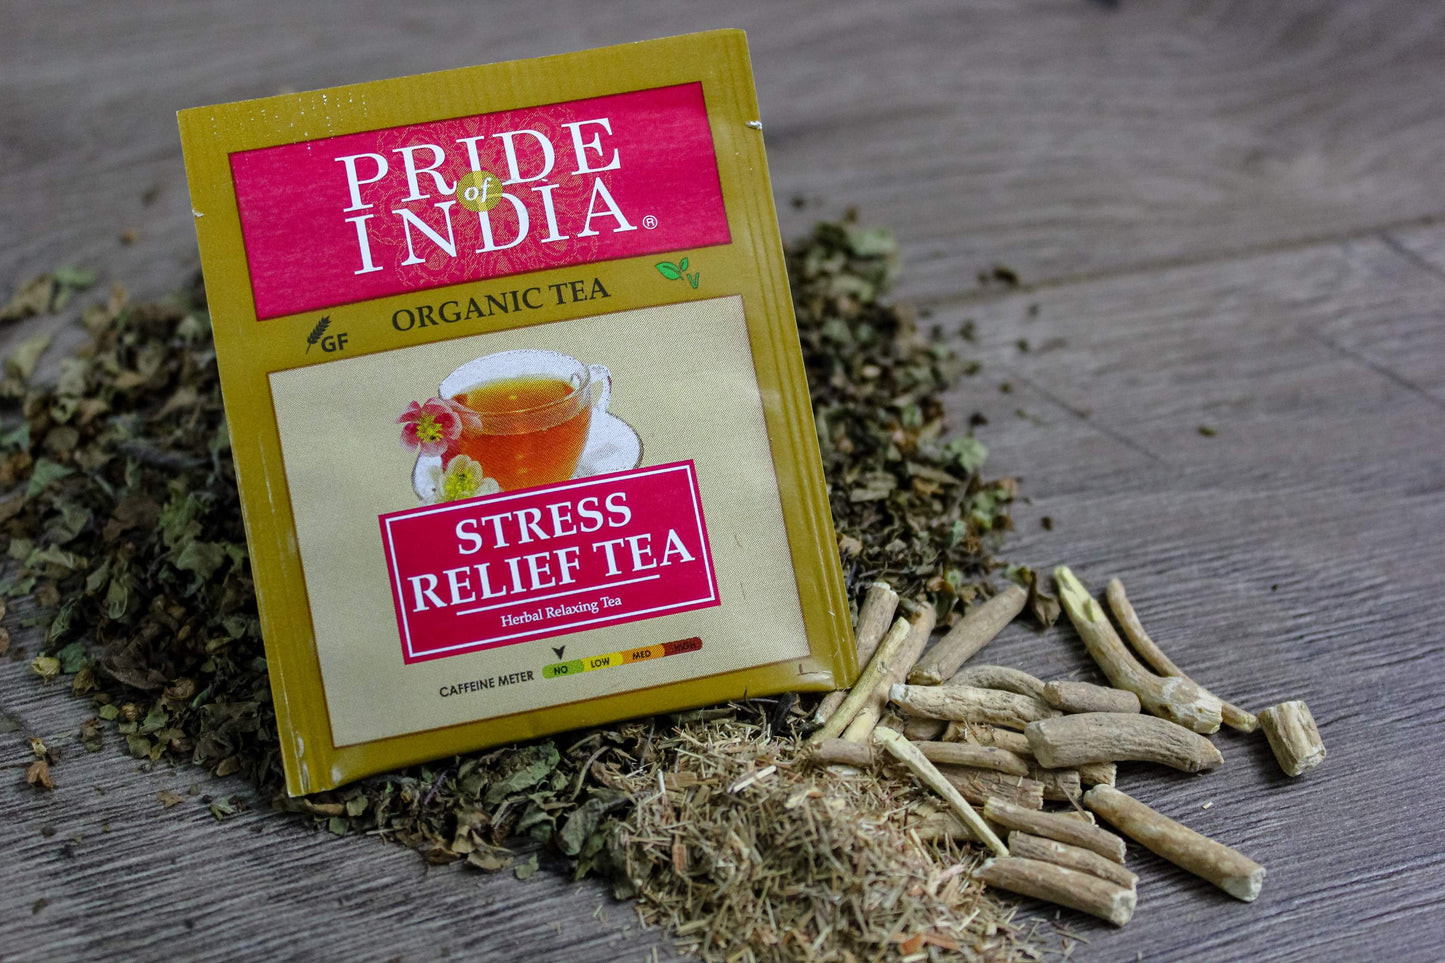 Organic Stress Relief Tea Bags (Caffeine Free)